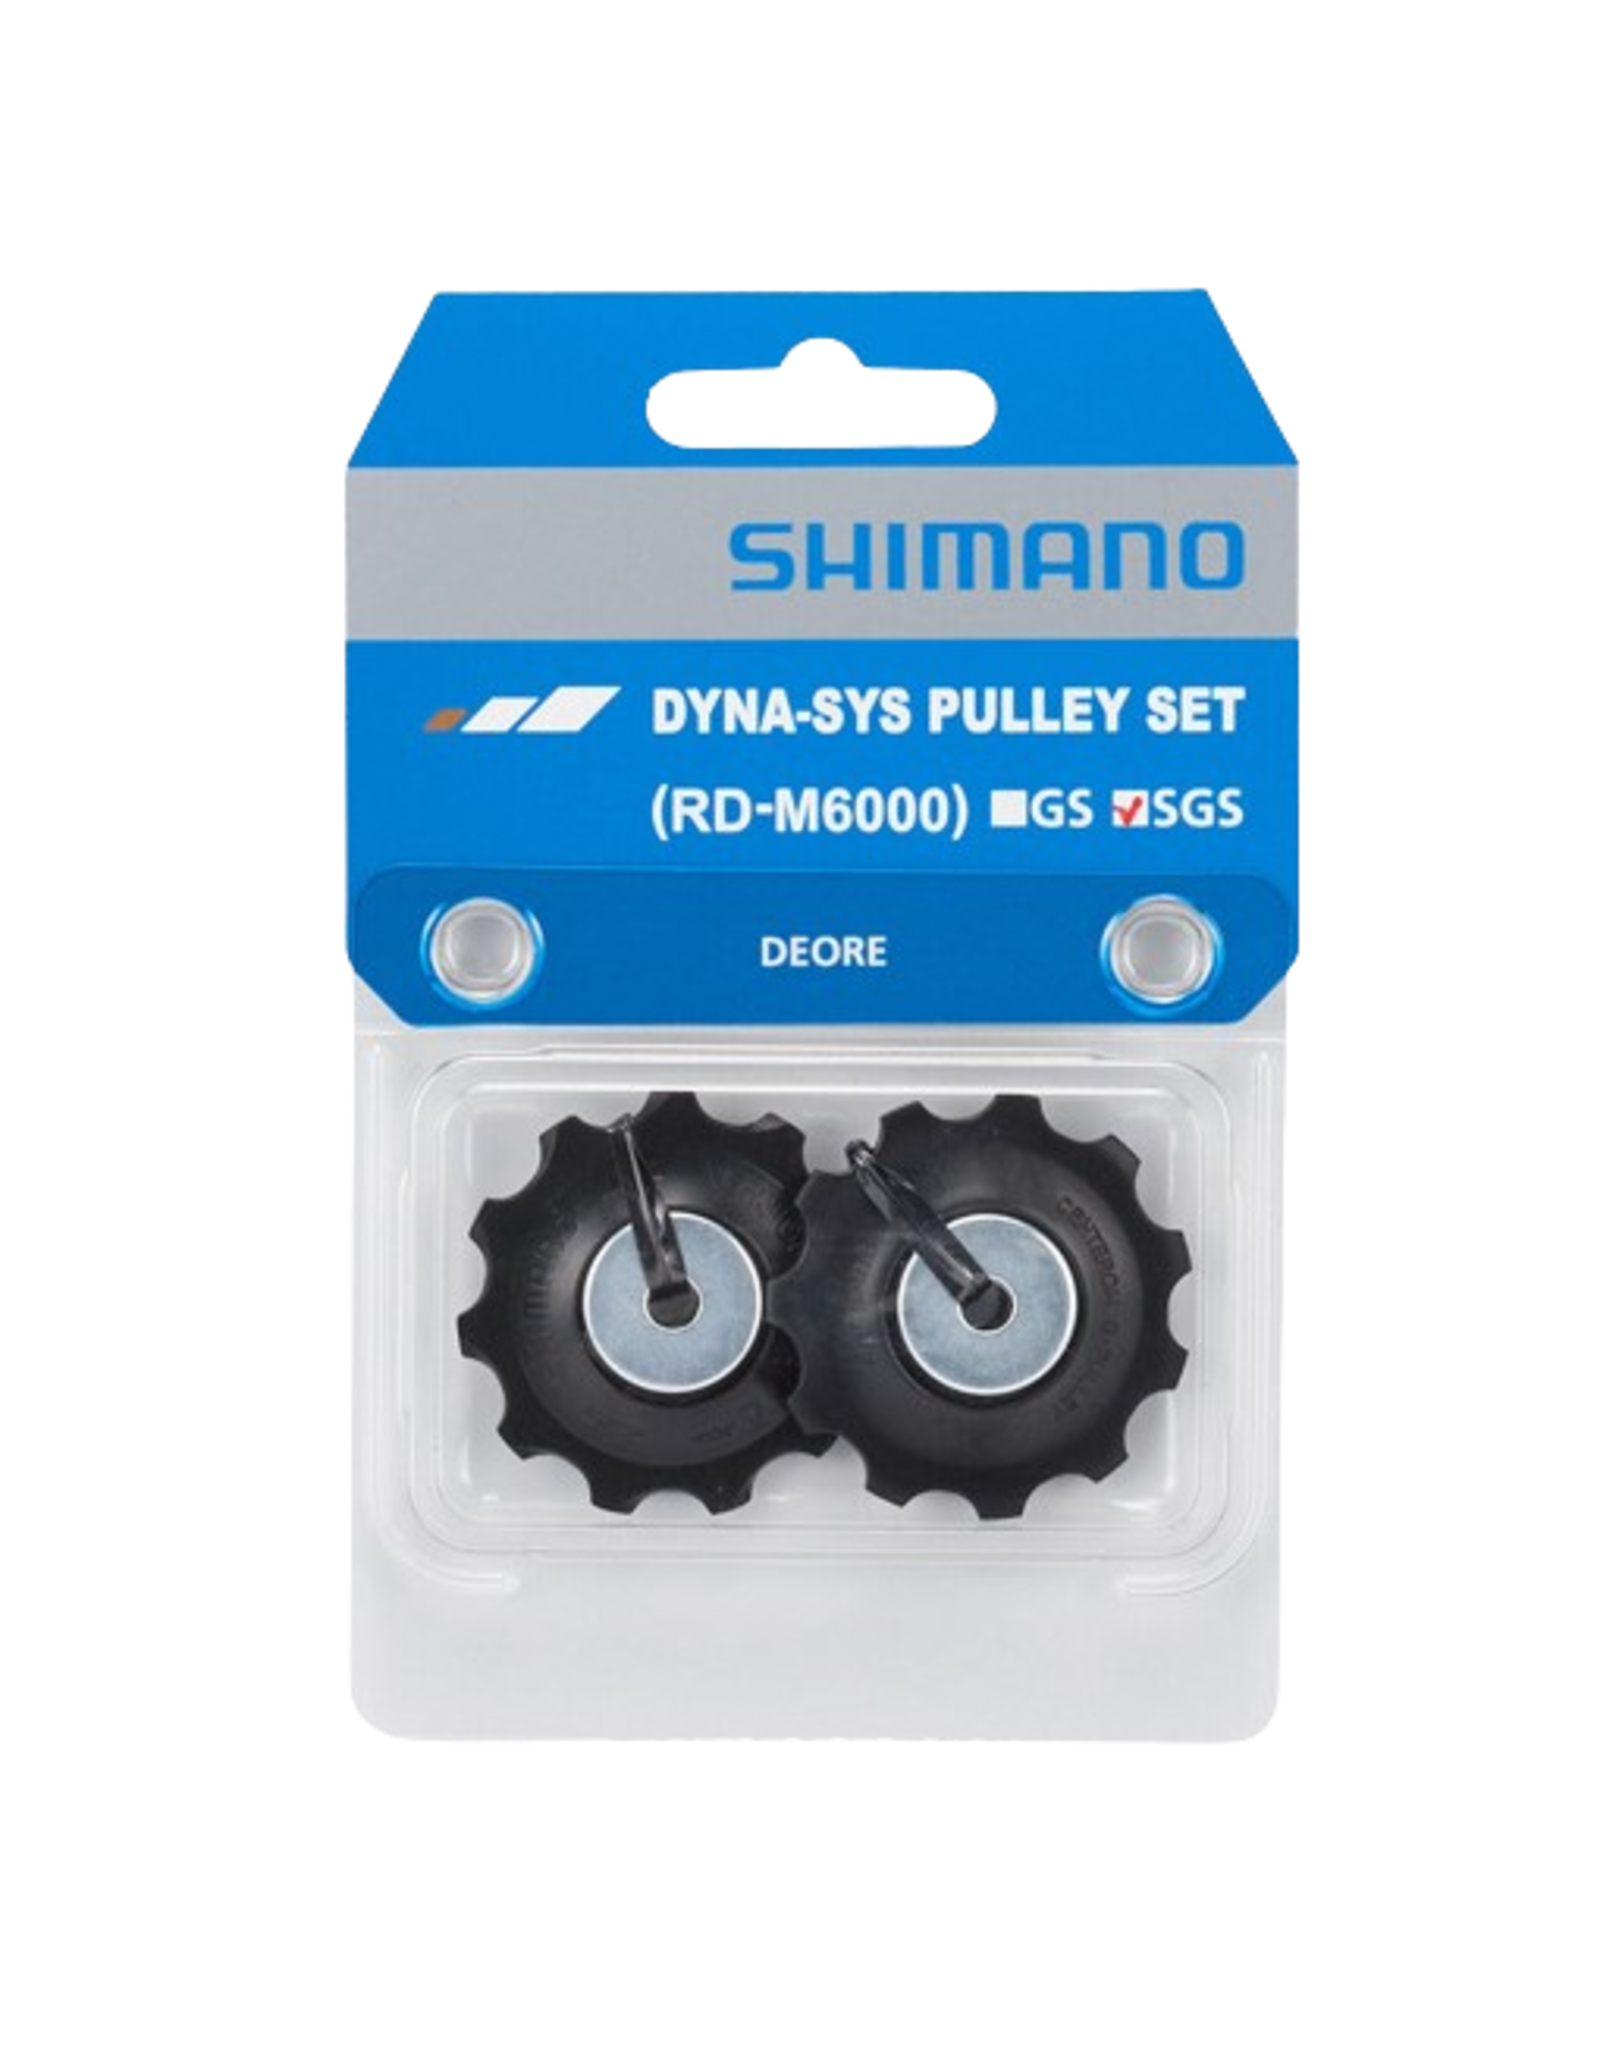 Shimano Pully set for rear derailleur Shimano RD-M6000 SGS (Deore 10-Speeds)